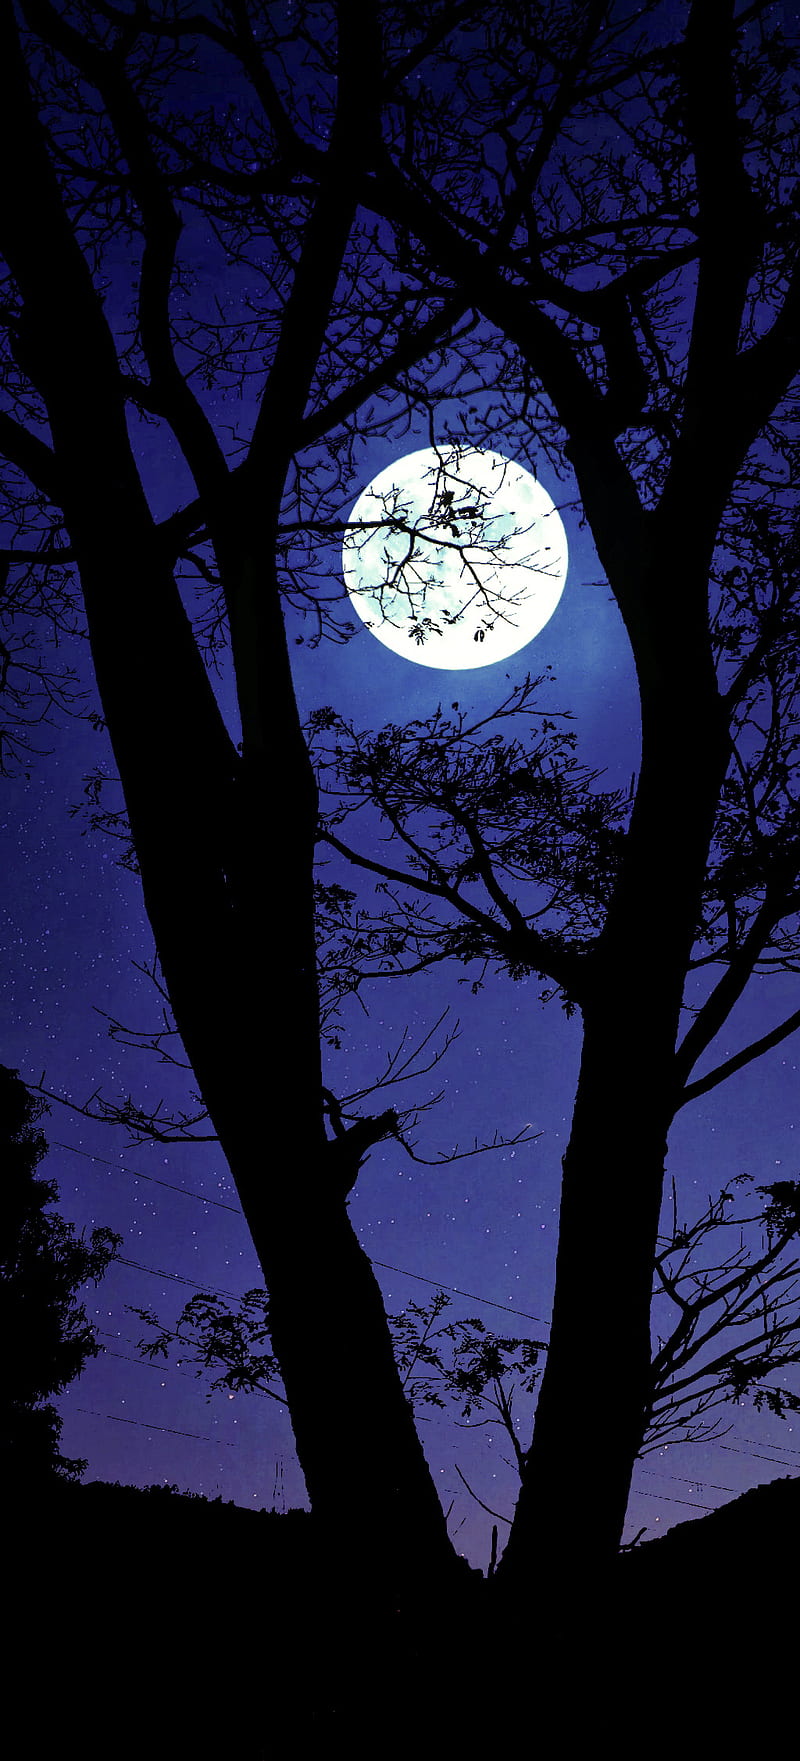 Aesthetic night sky background, moon | Premium Vector Illustration -  rawpixel